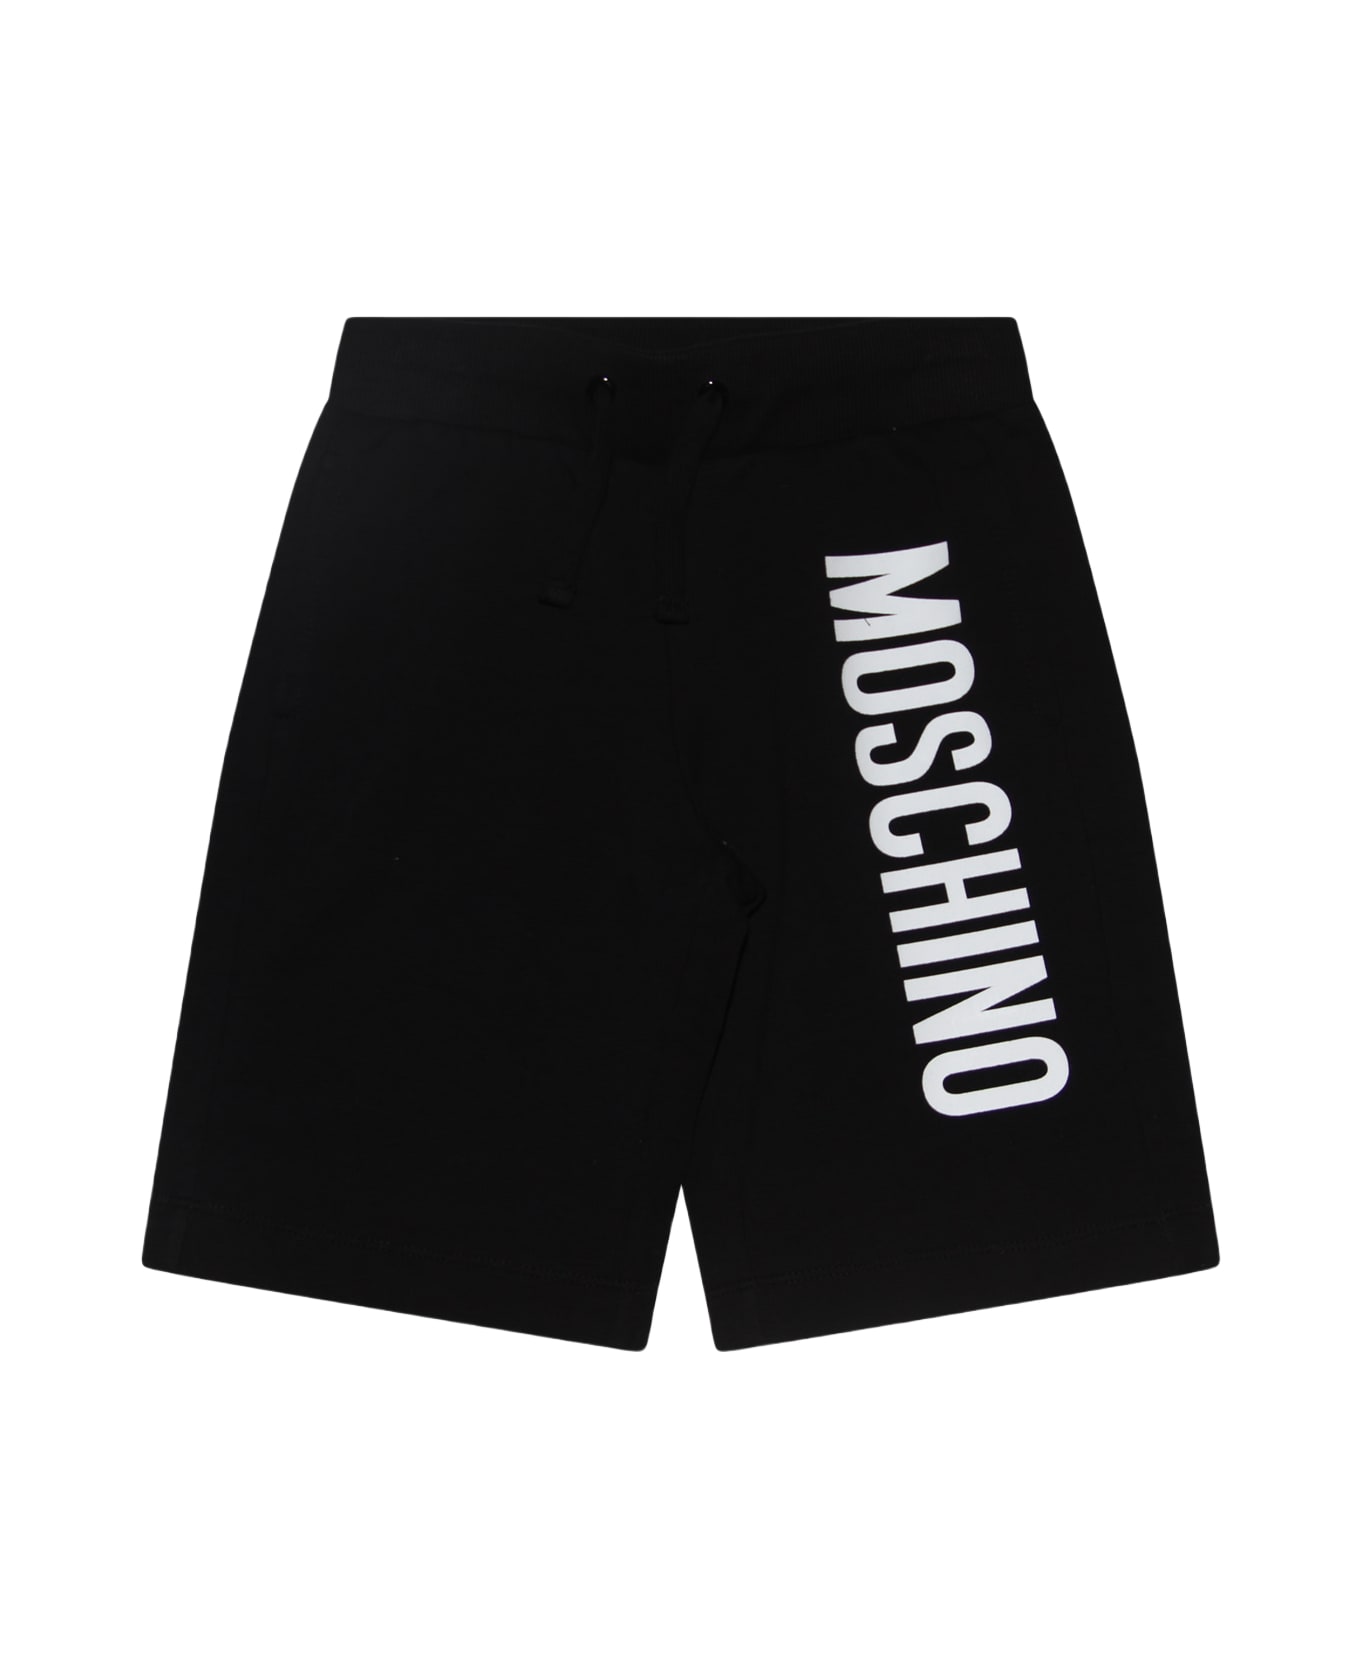 Moschino Black And White Cotton Blend Track Shorts - BLACK